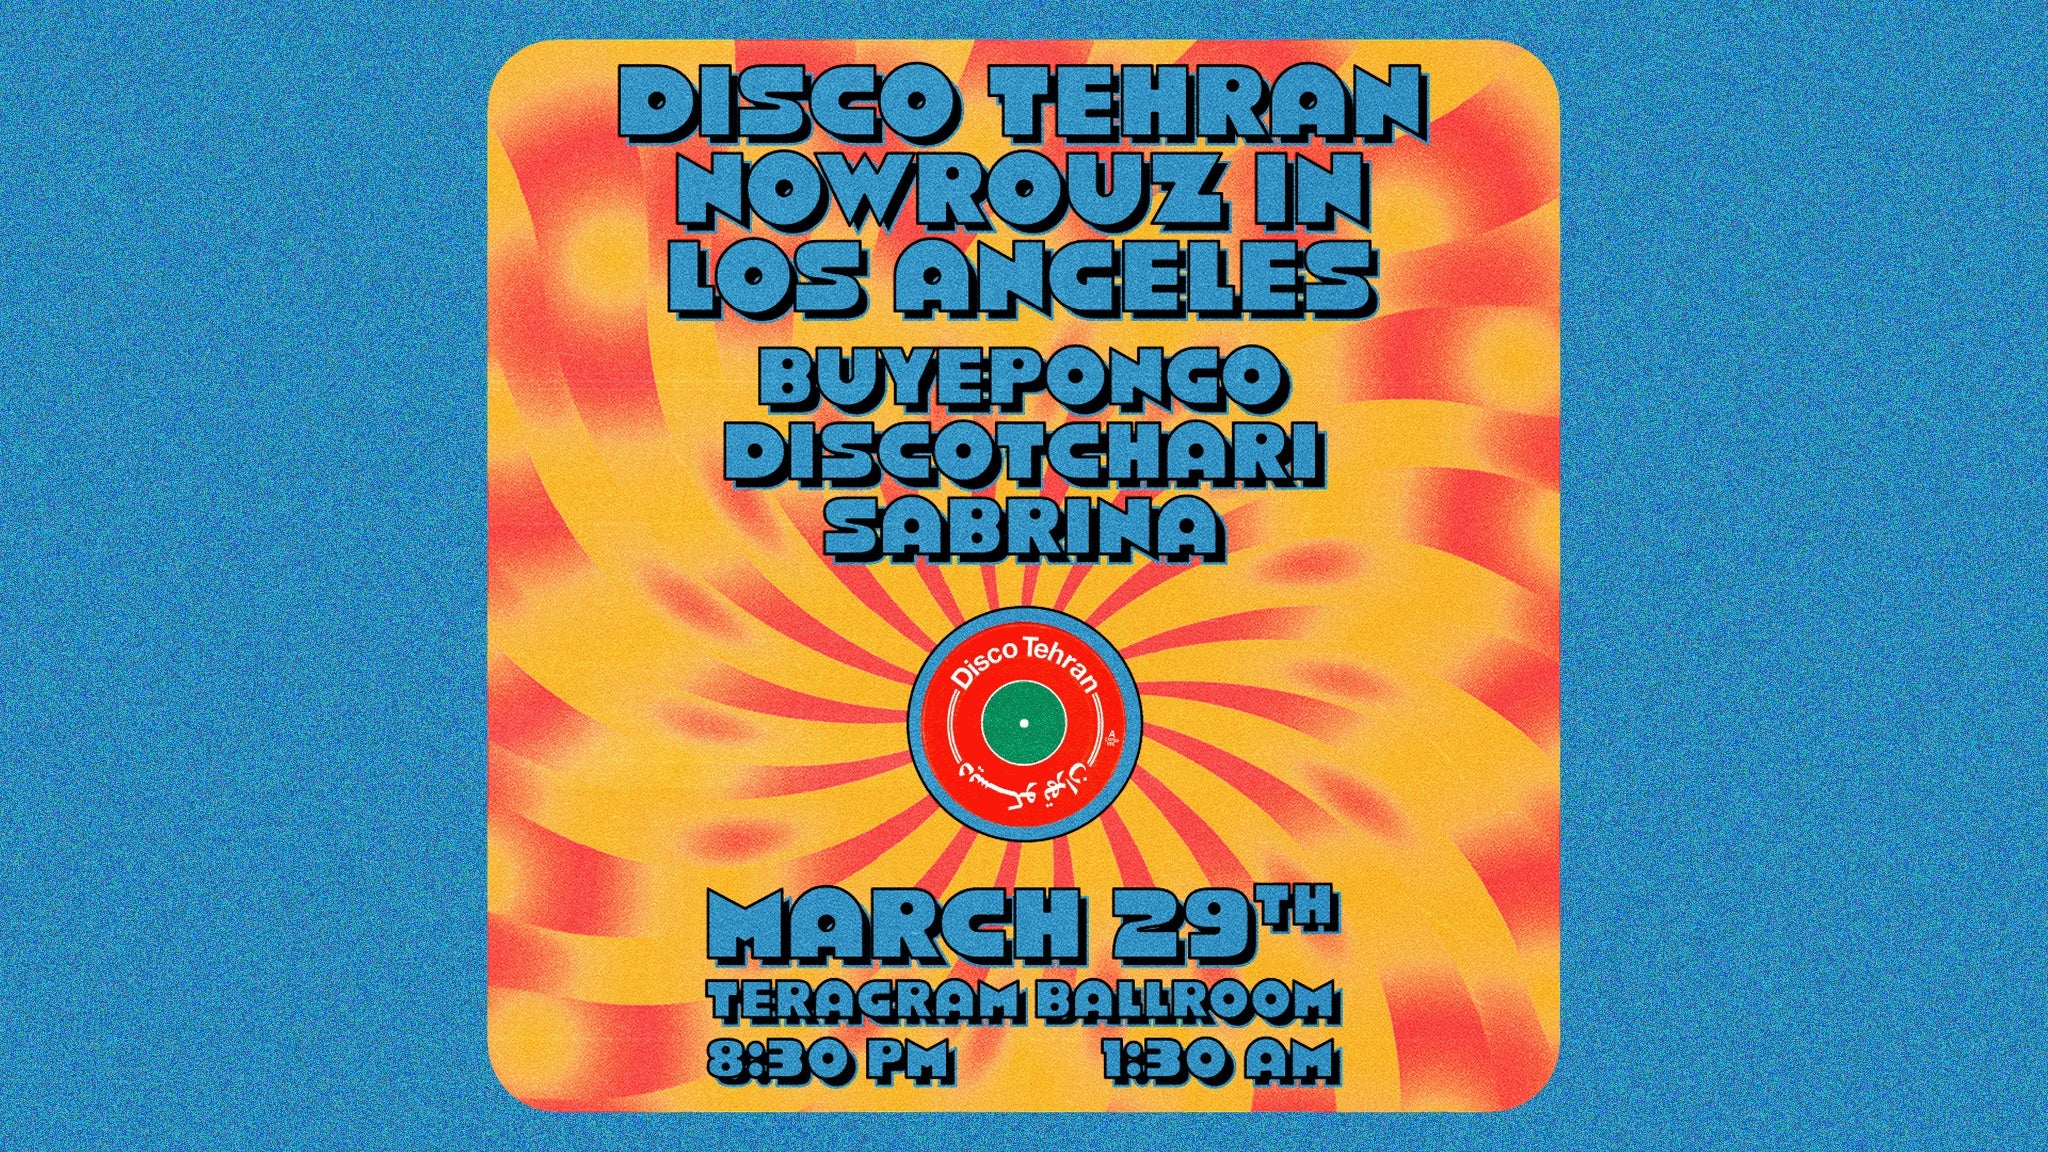 Disco Tehran - Nowrouz in LA at Teragram Ballroom